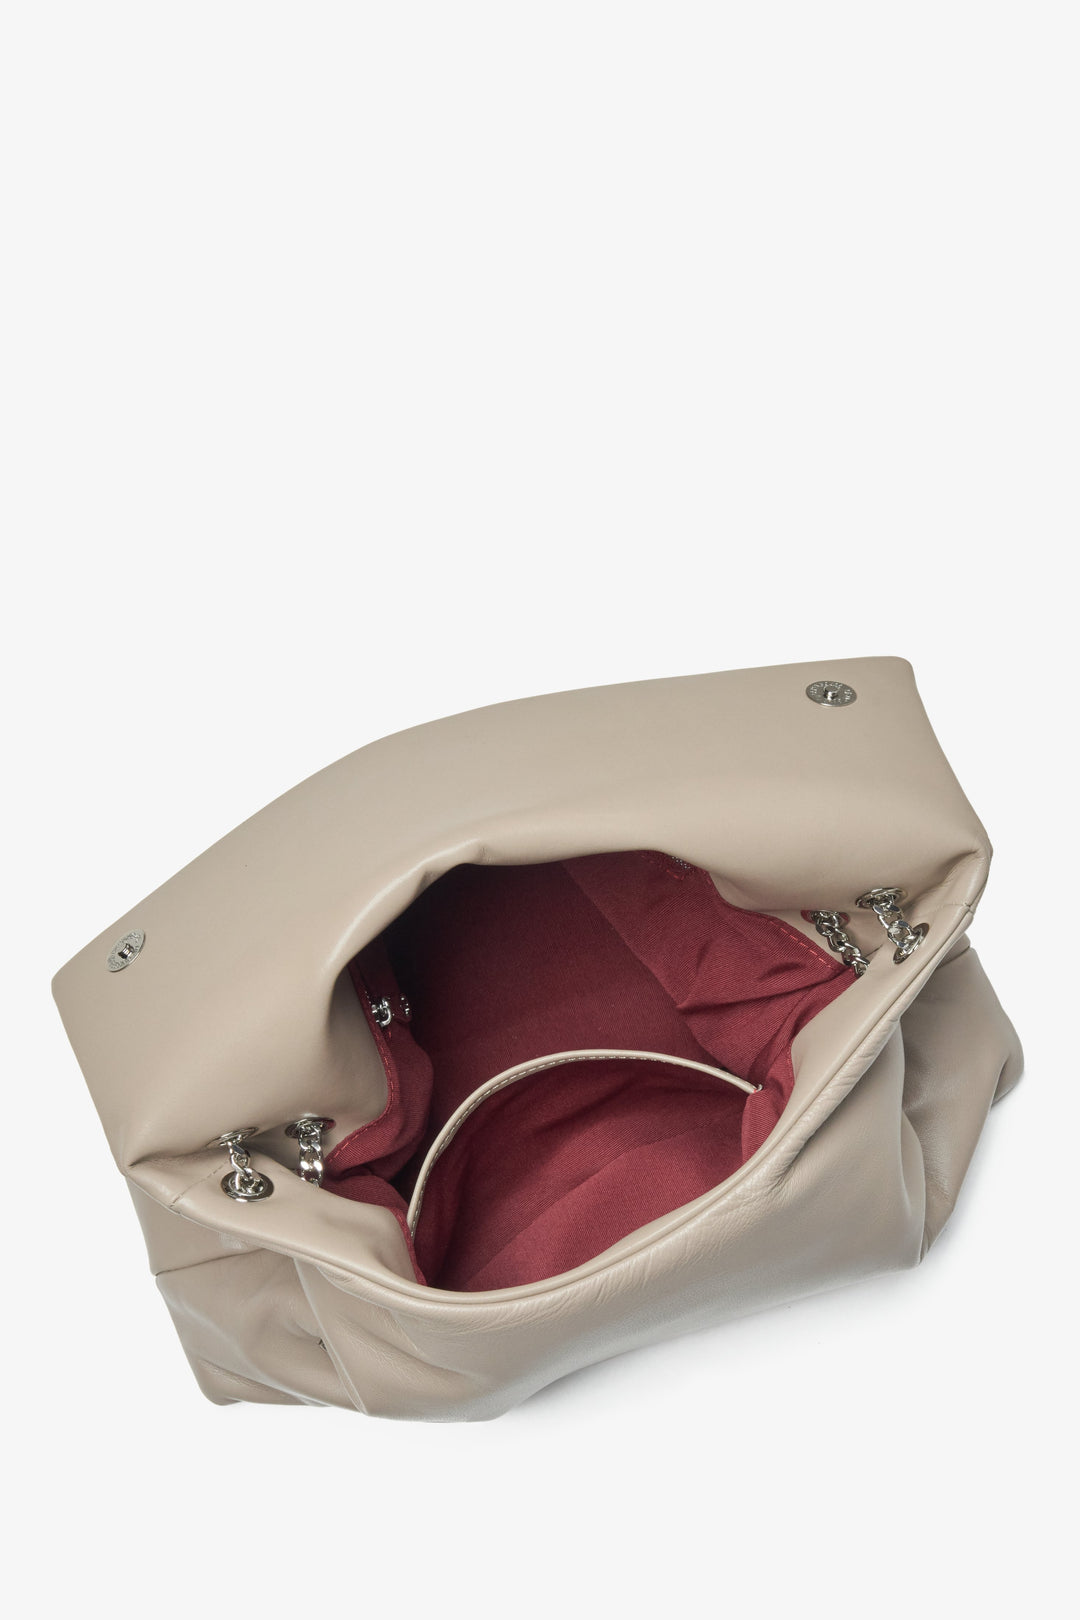 Women's beige and grey leather handbag Estro - interior close-up.